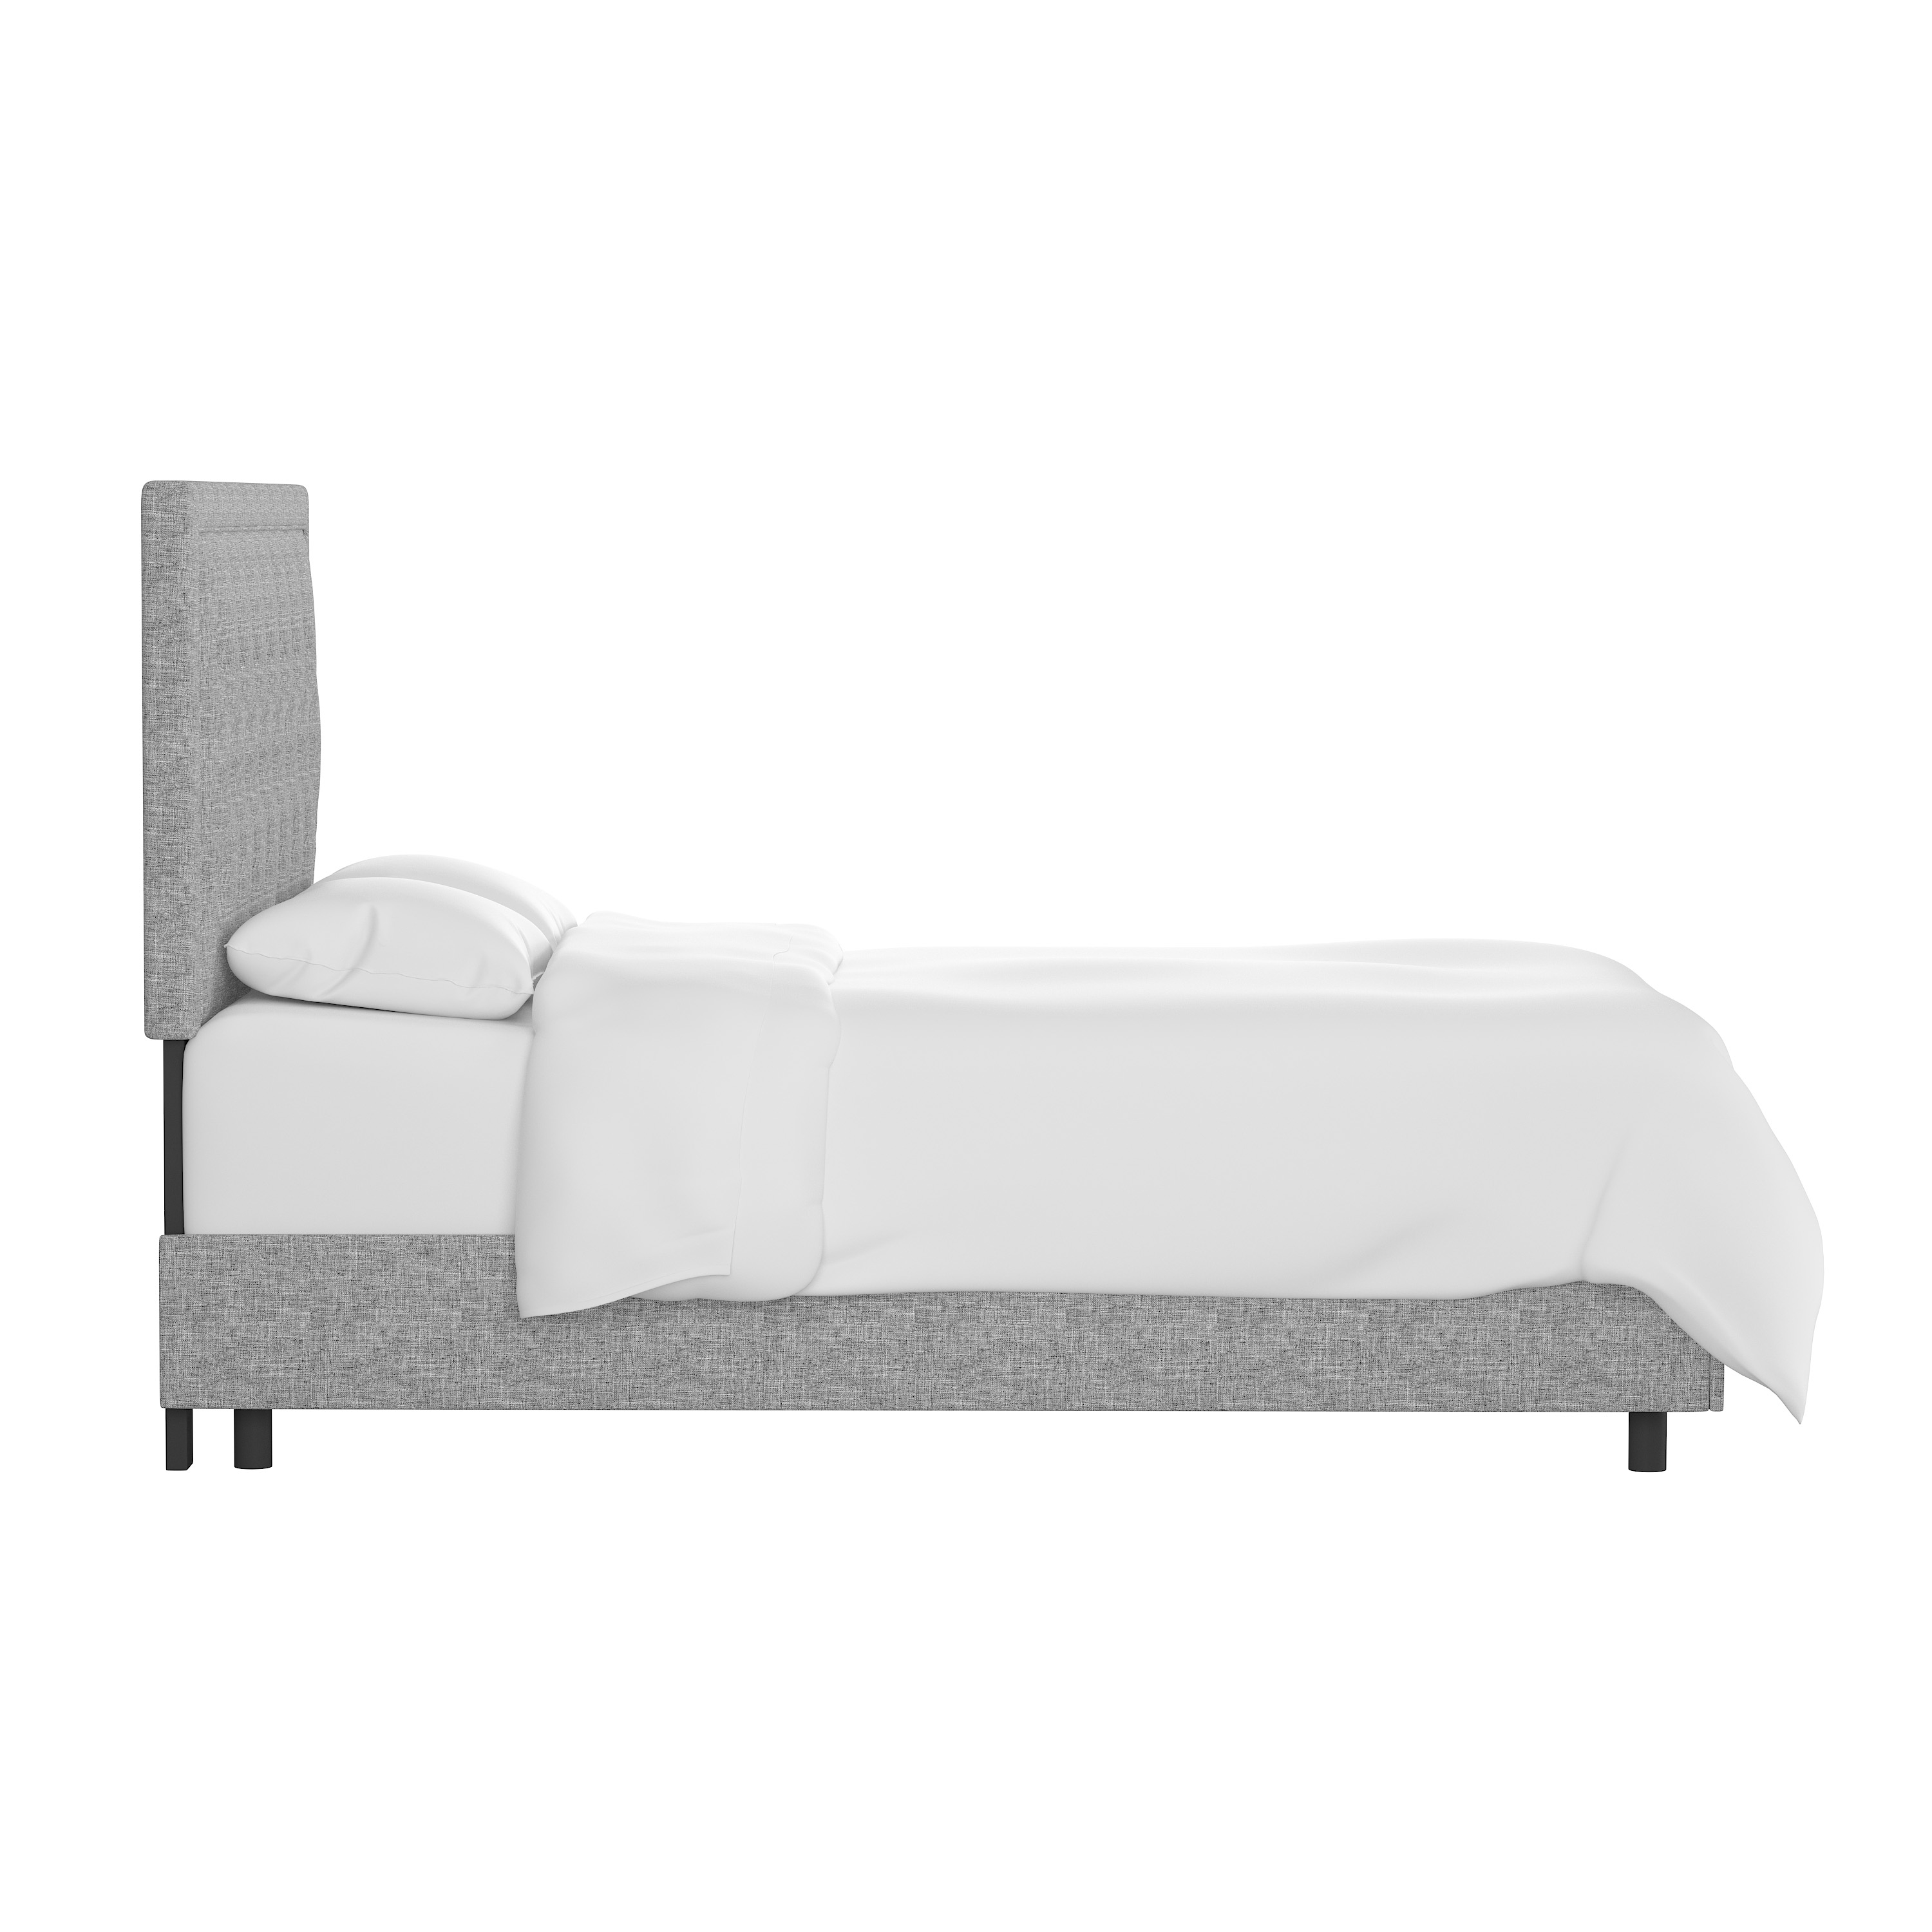 Lafayette Bed, Queen, Pumice - Image 2